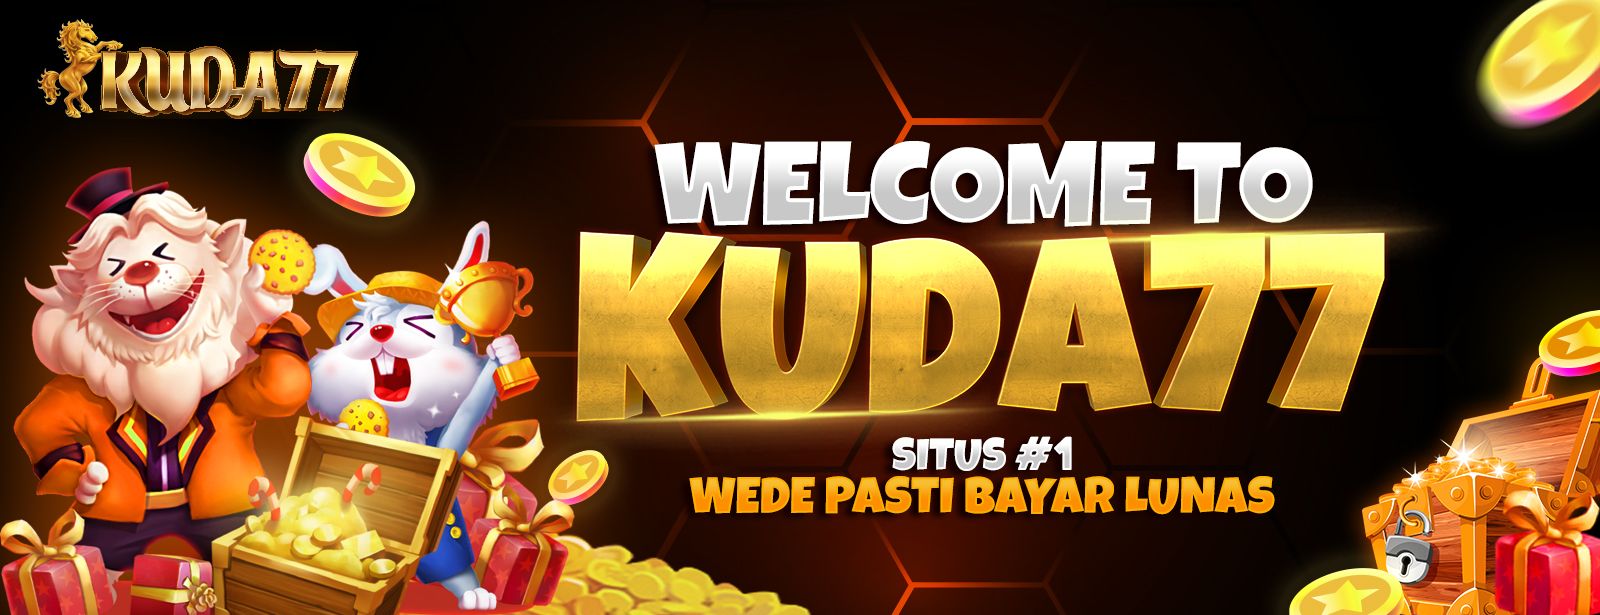 KUDA77 Welcome